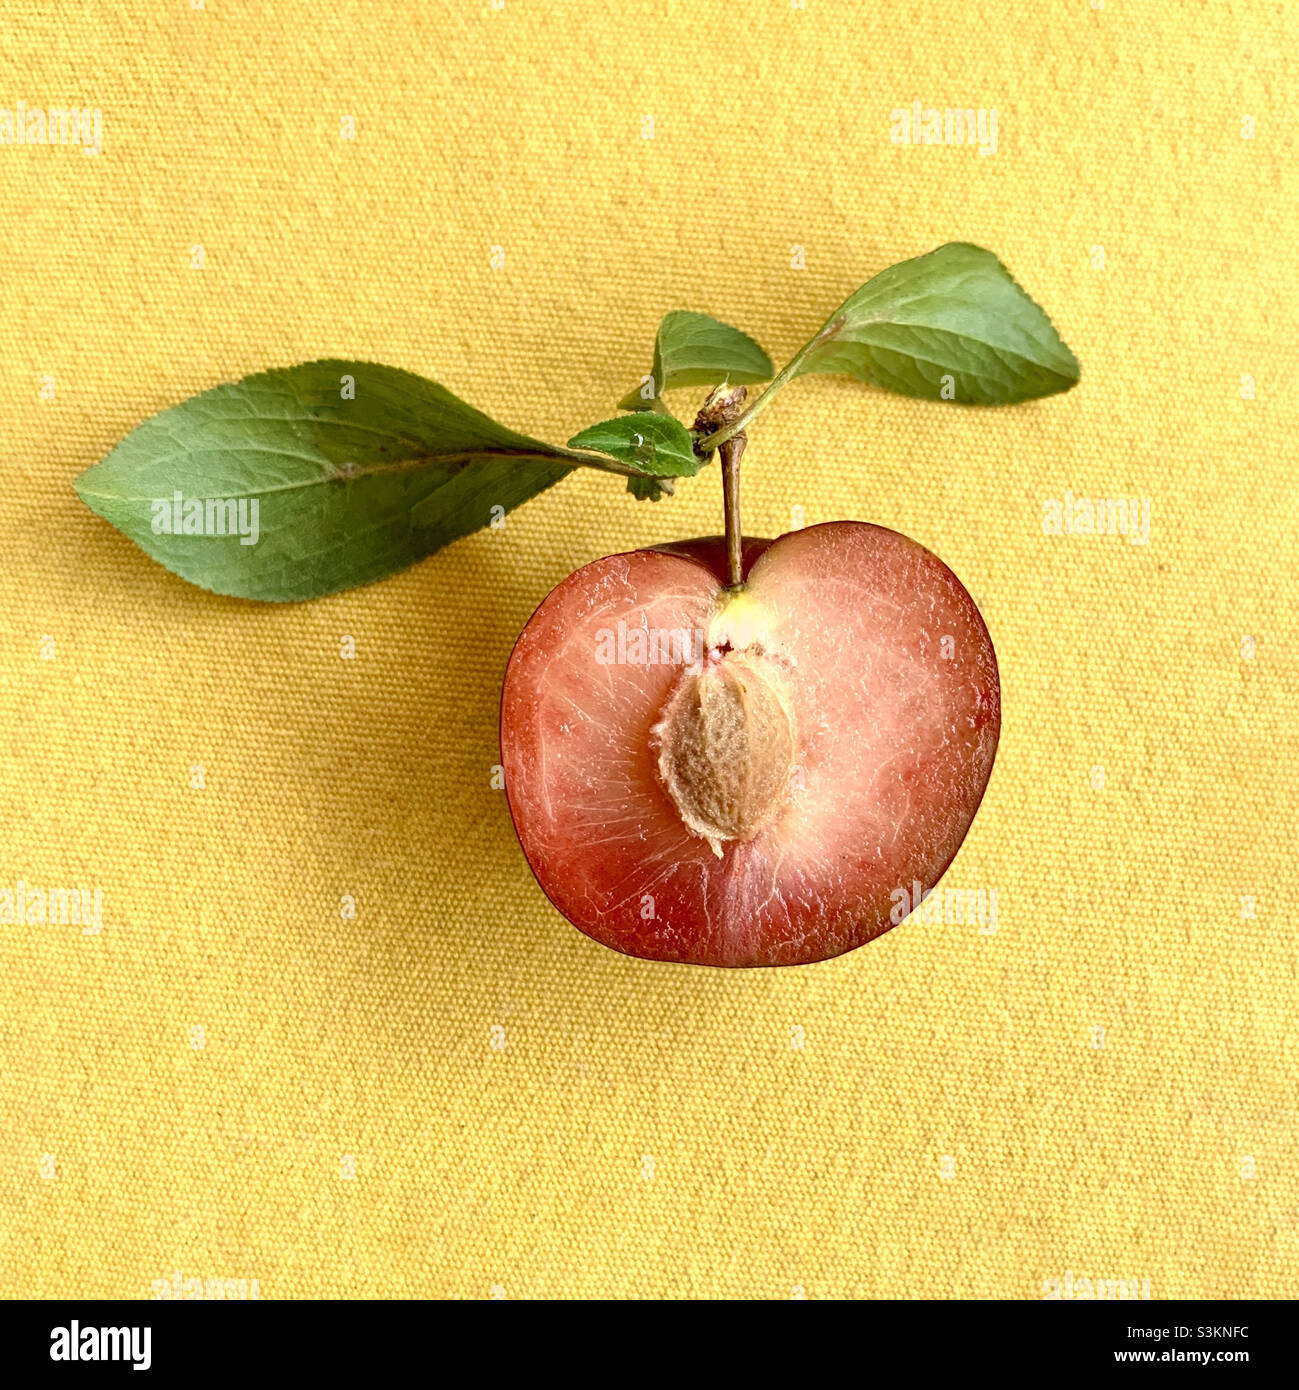 Ripe red plum on yellow background Stock Photo